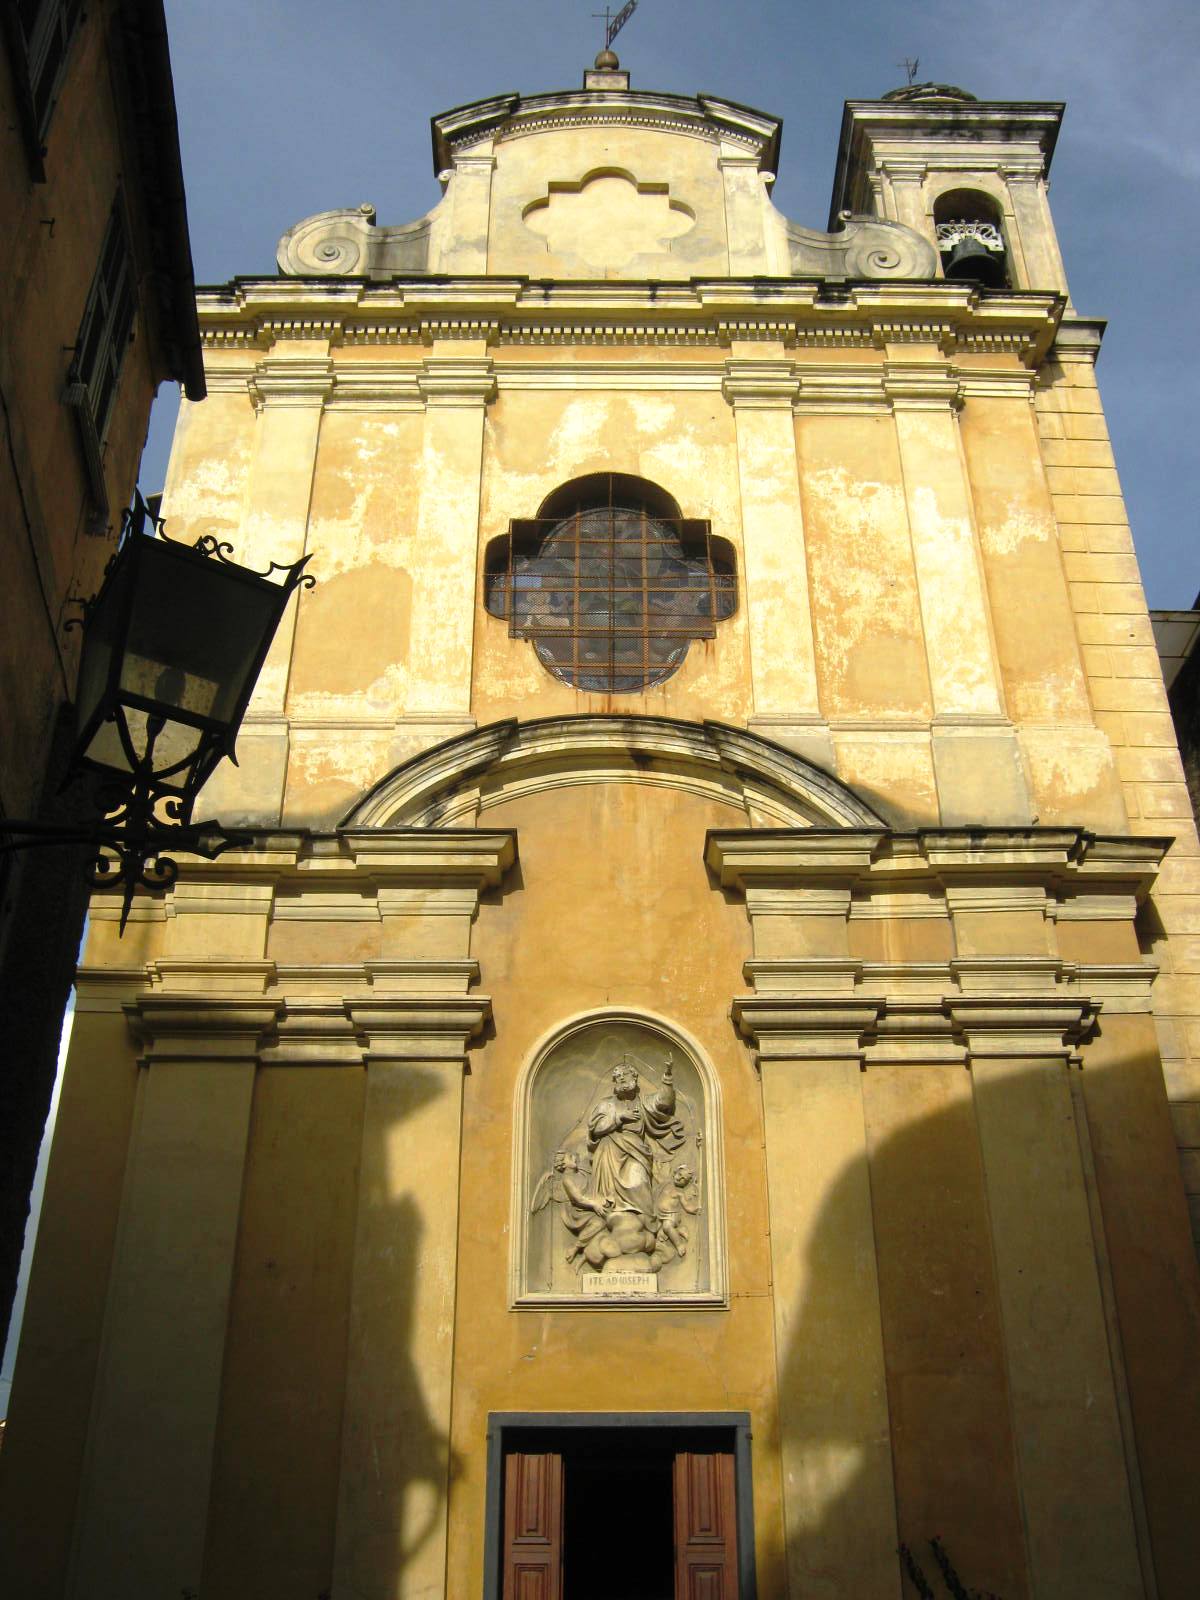 The facade of the church of St. Joseph